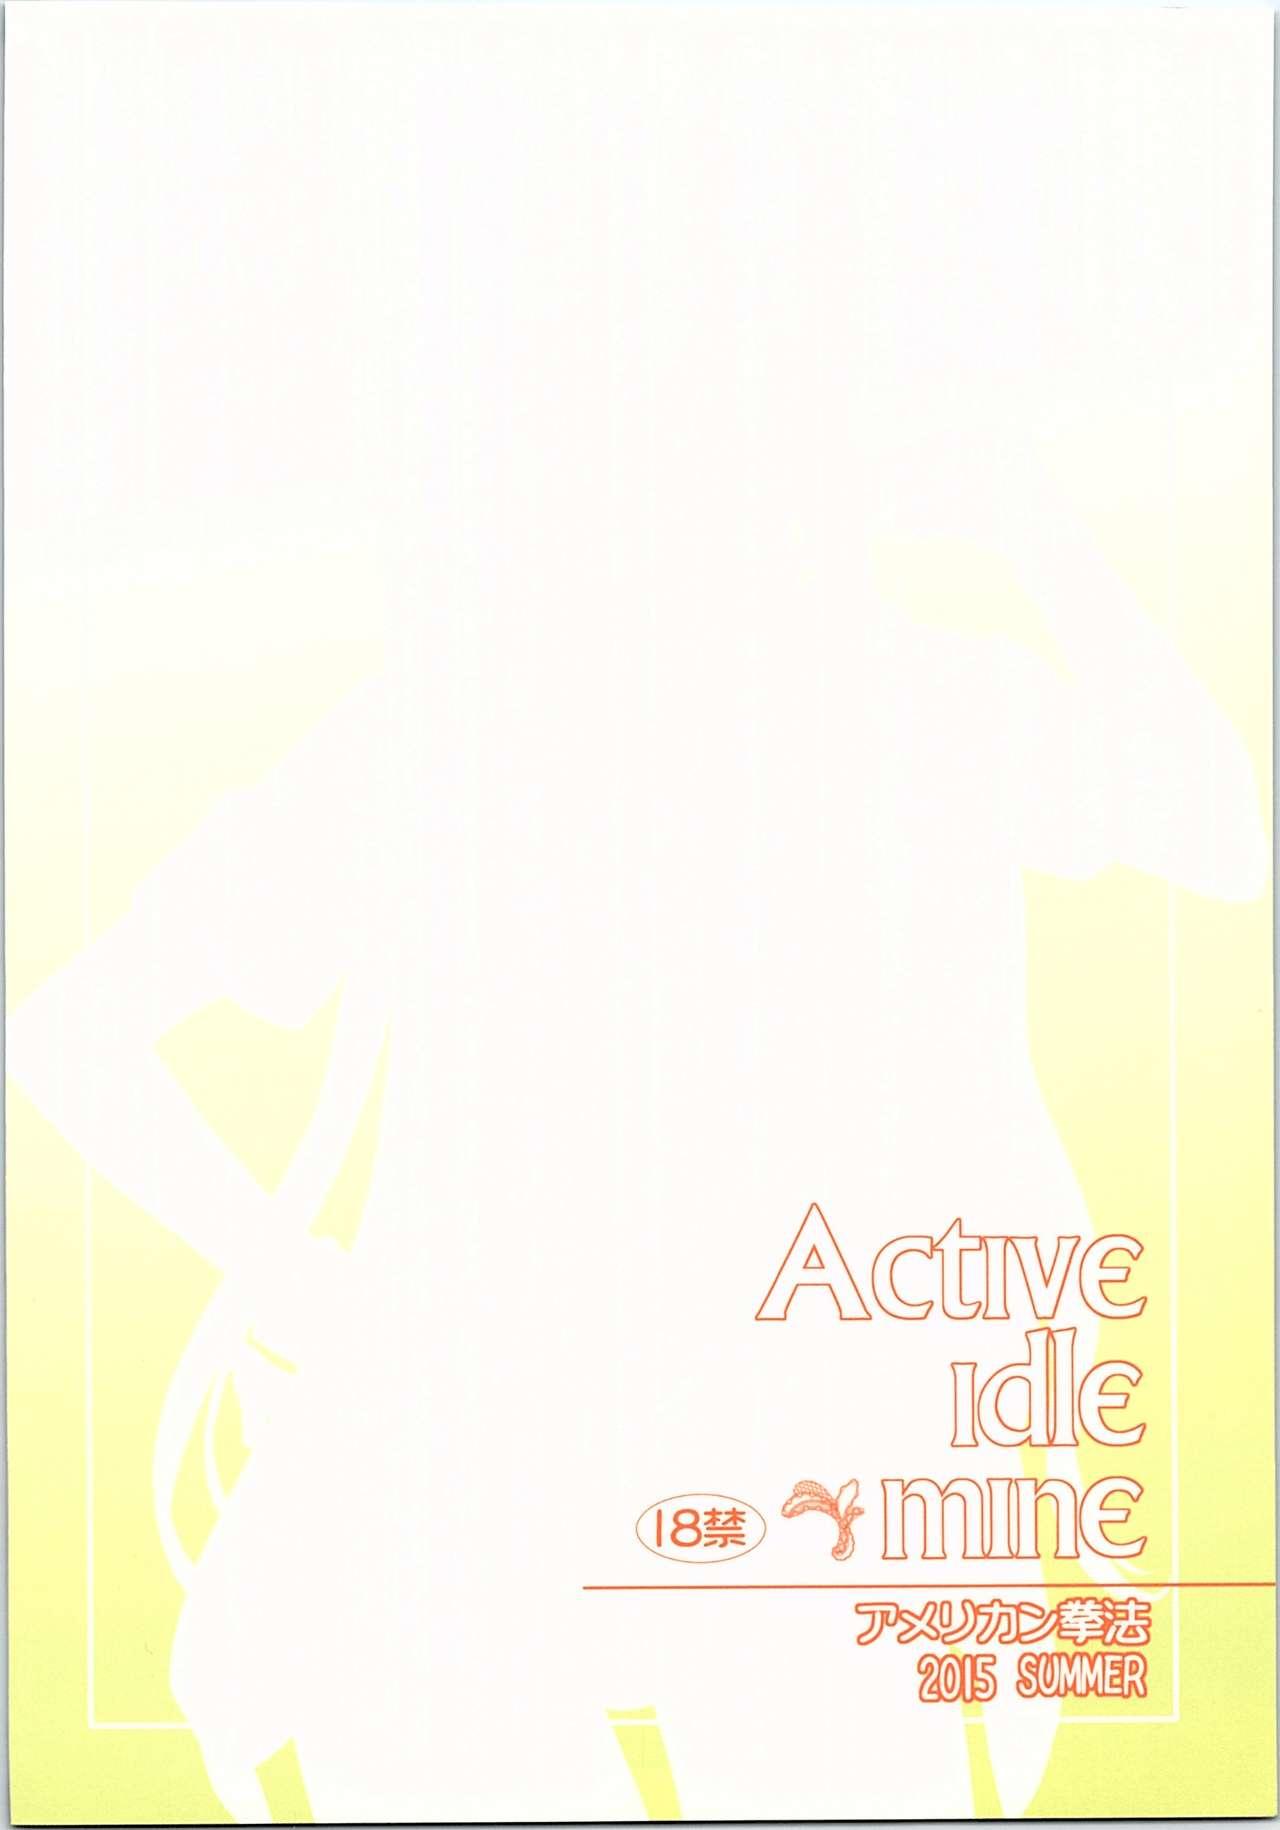 Active idle mine 48